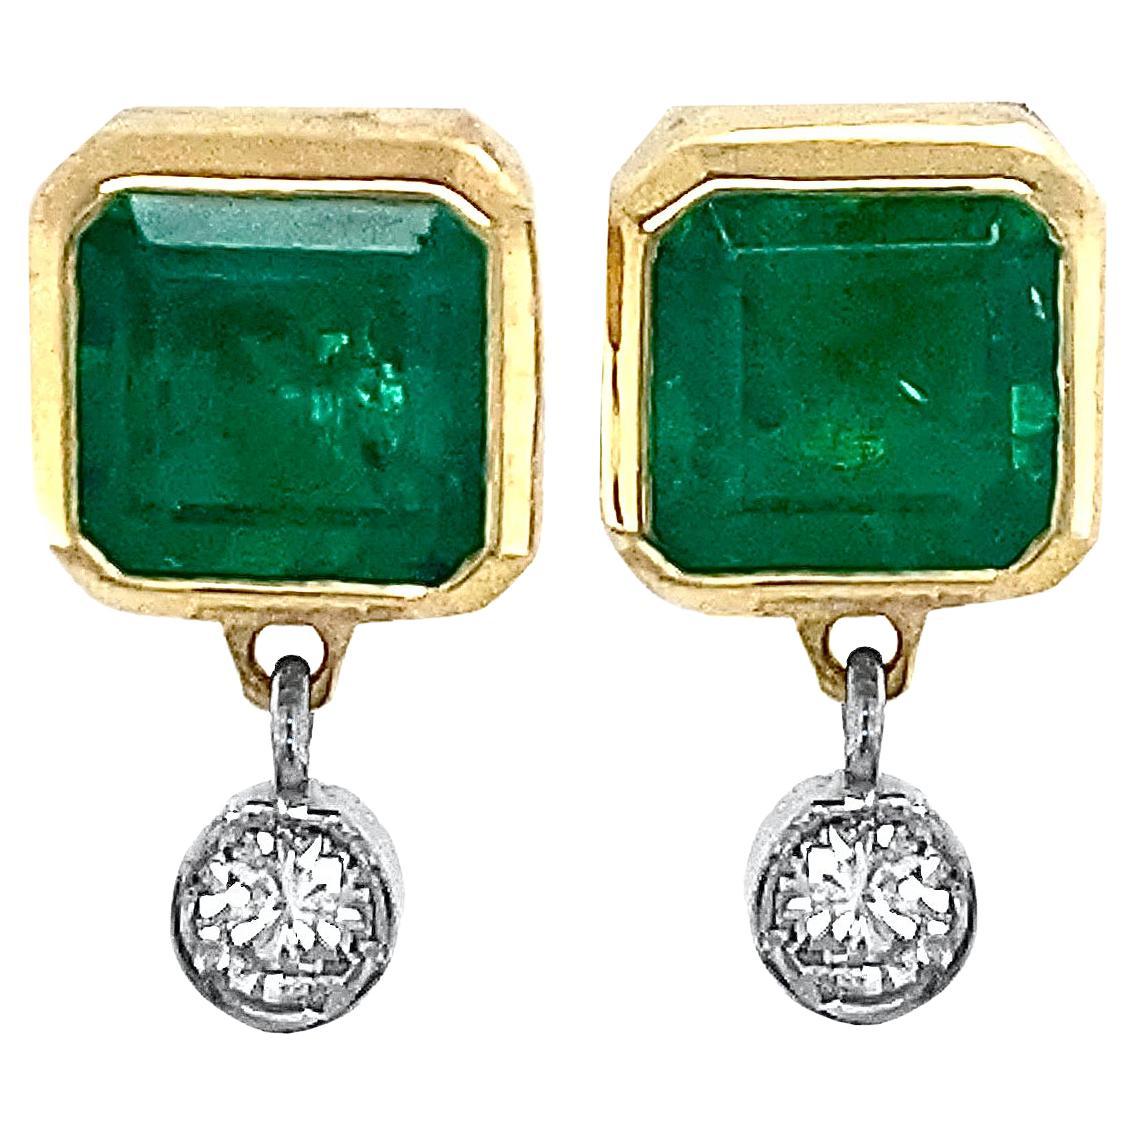 1 Carat Colombian Emerald Earrings in 18 Karat Yellow Gold with Diamond Drops